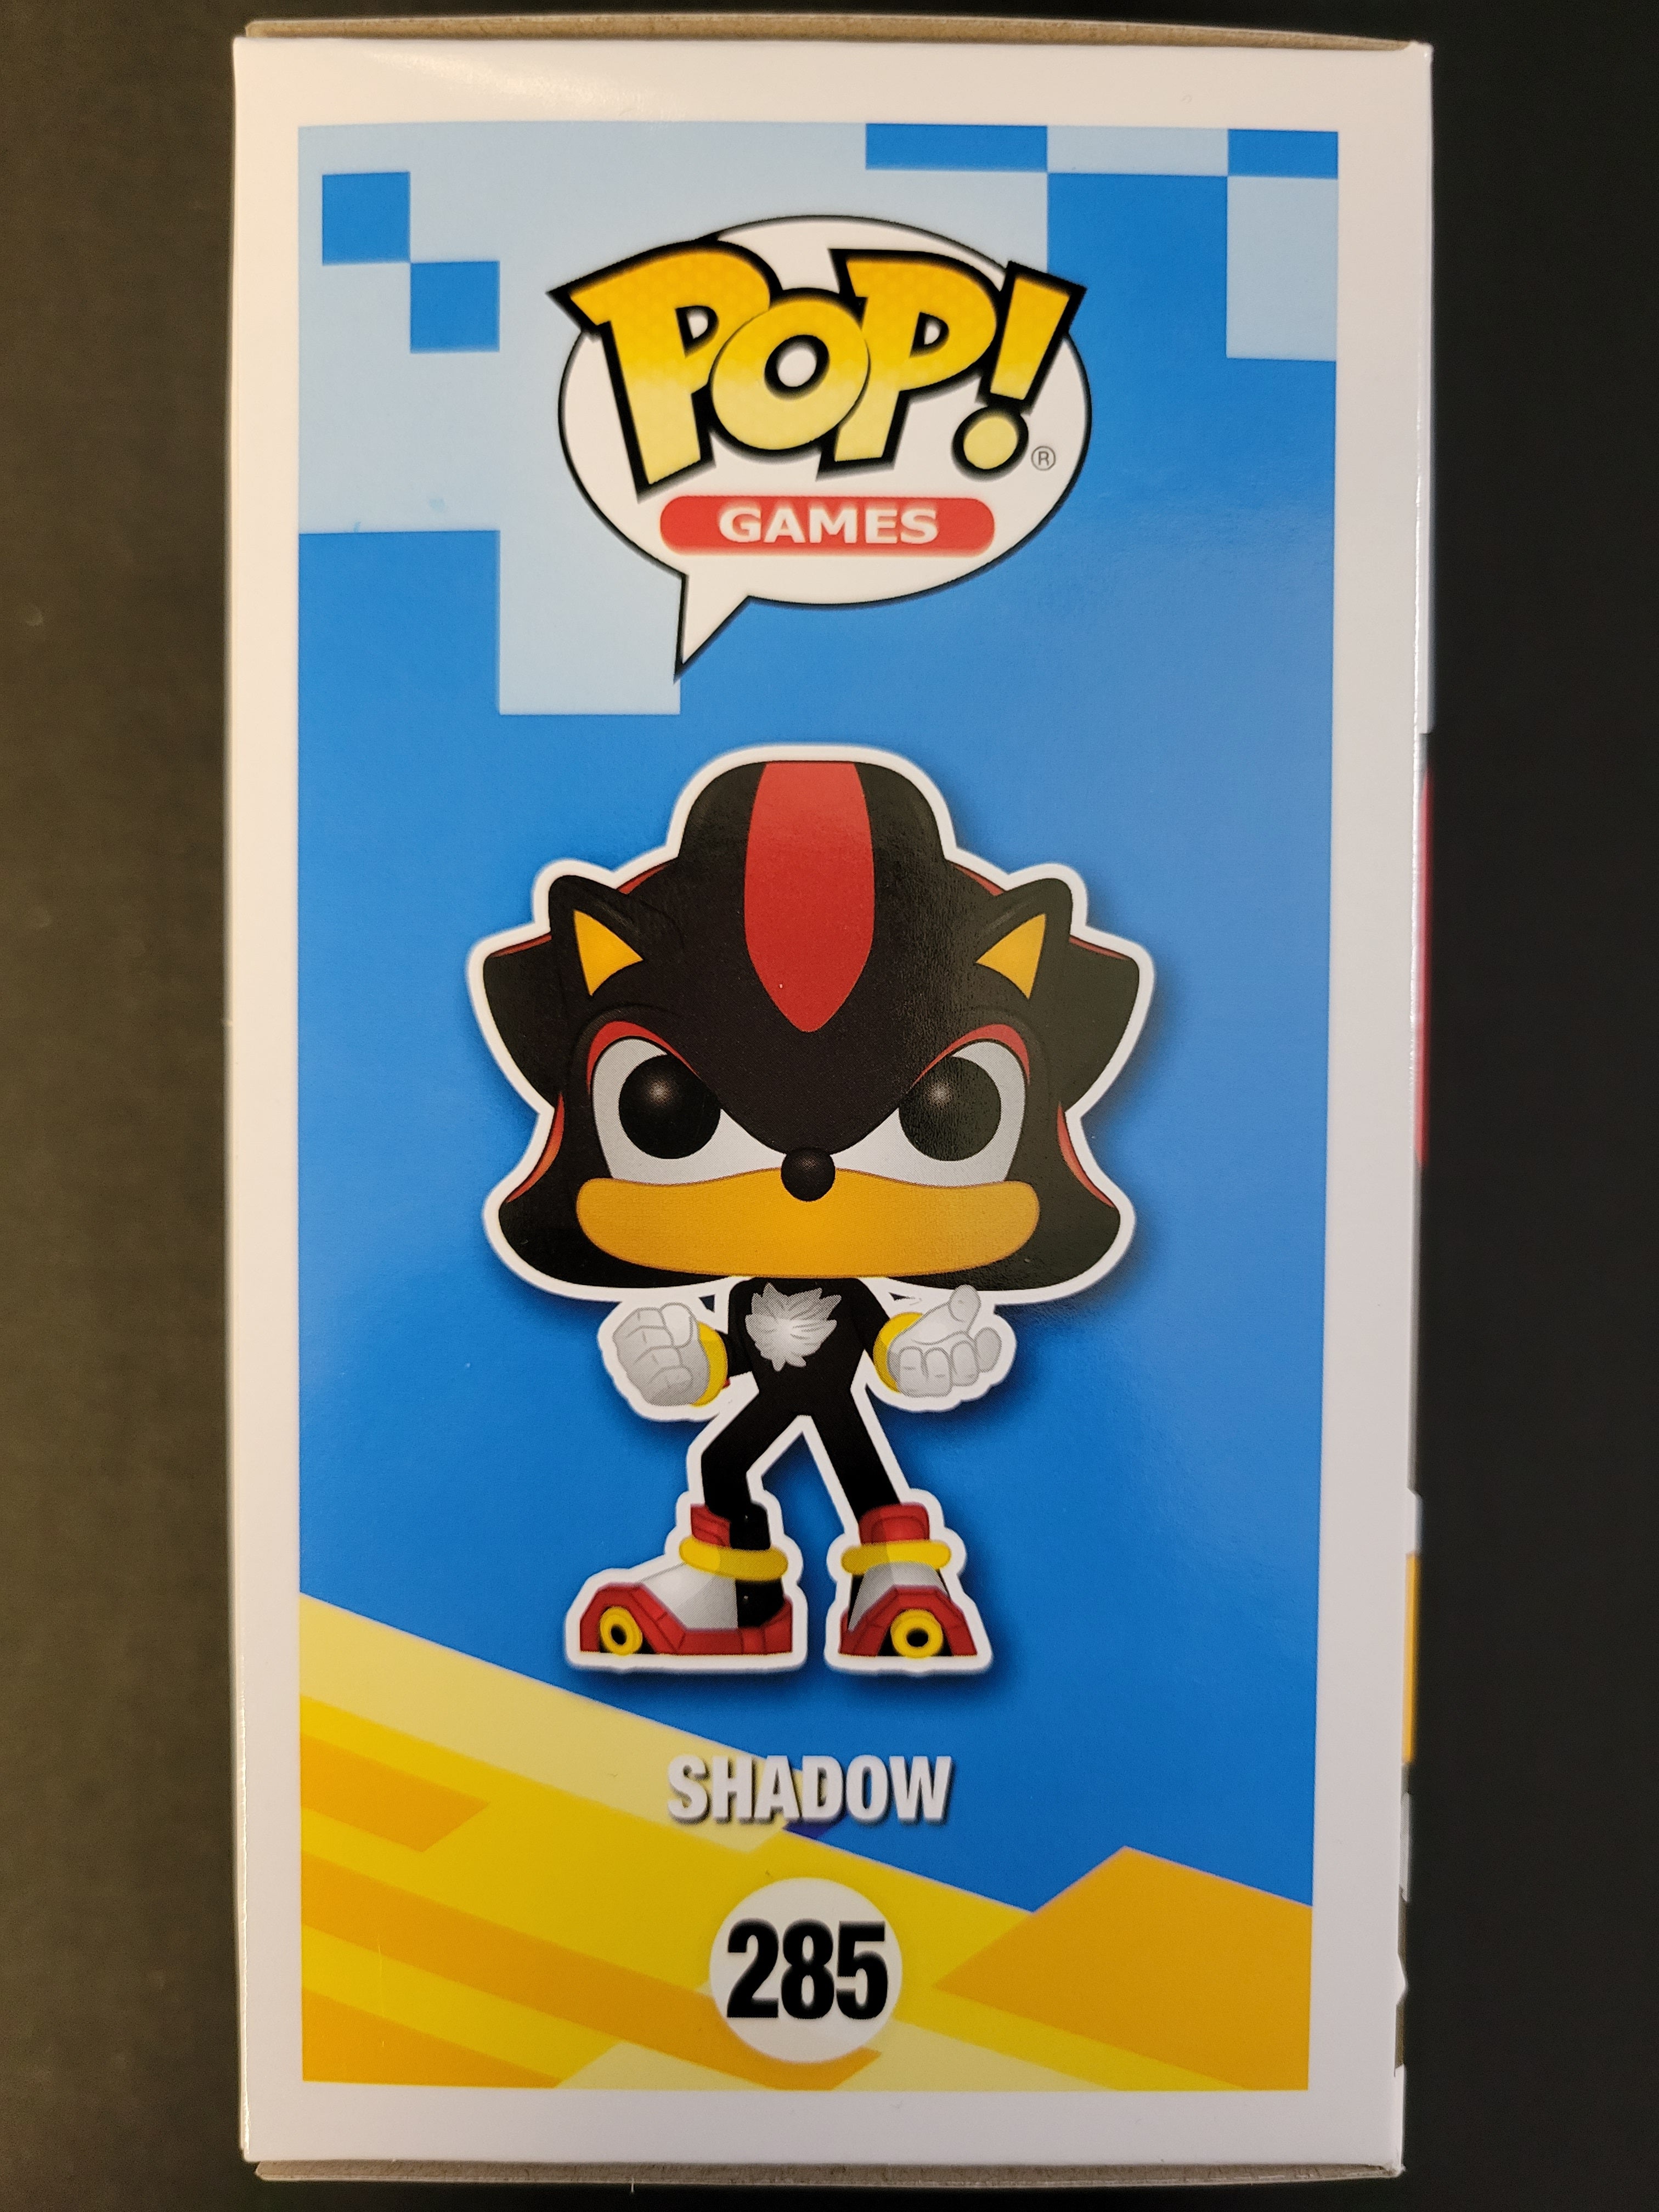 Funko Pop: Shadow The Hedgehog #285 Autographed by Jason Griffith - Cert 706